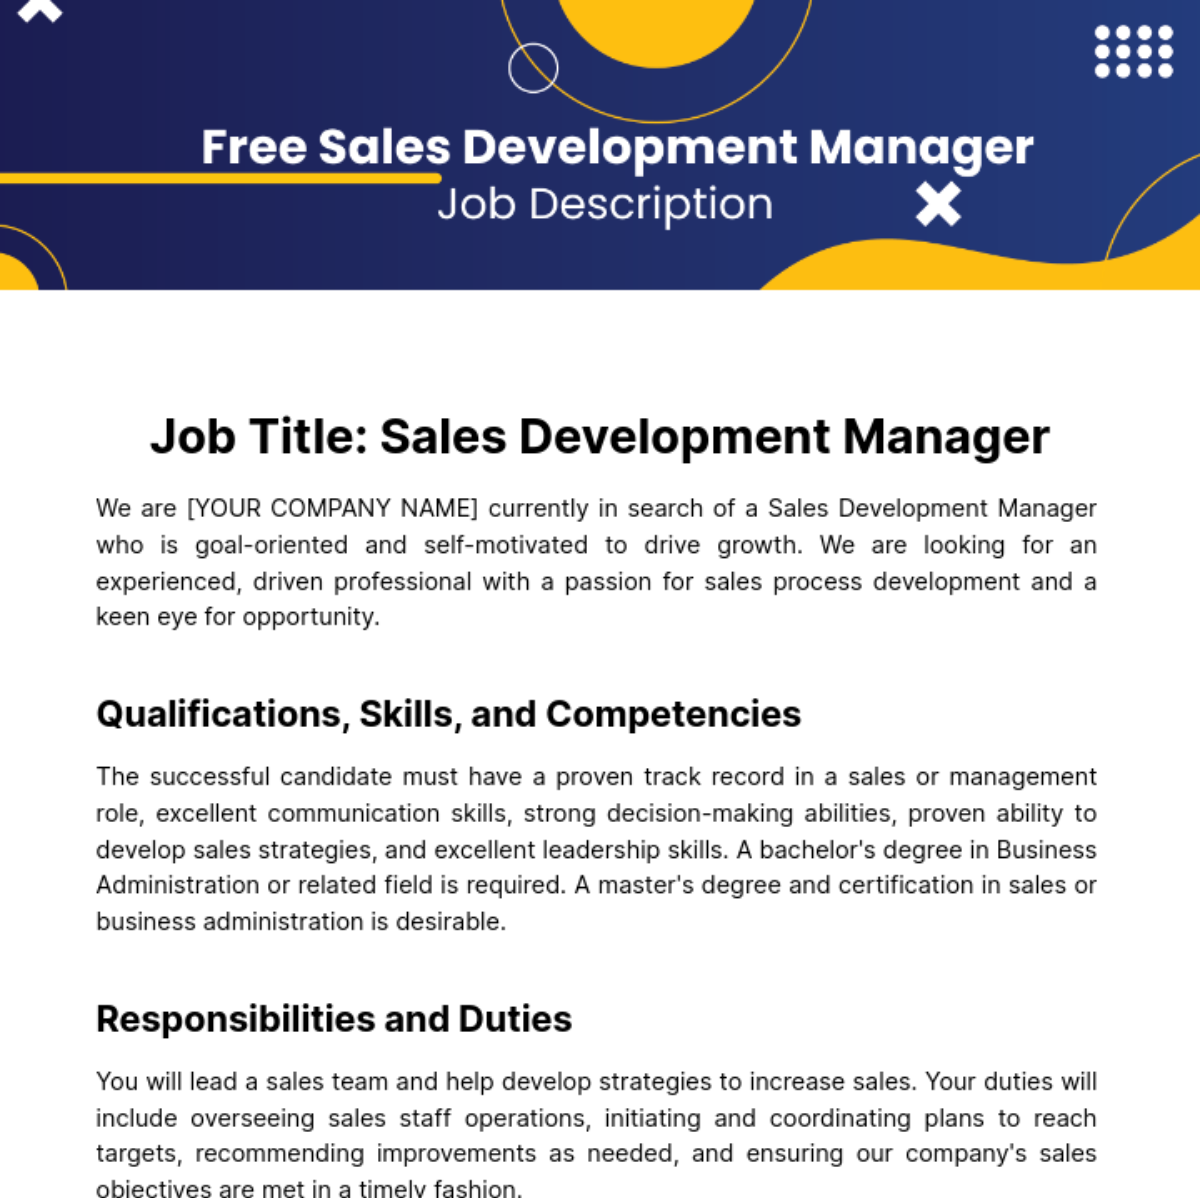 Free Sales Developmenet Manager Job Description Template